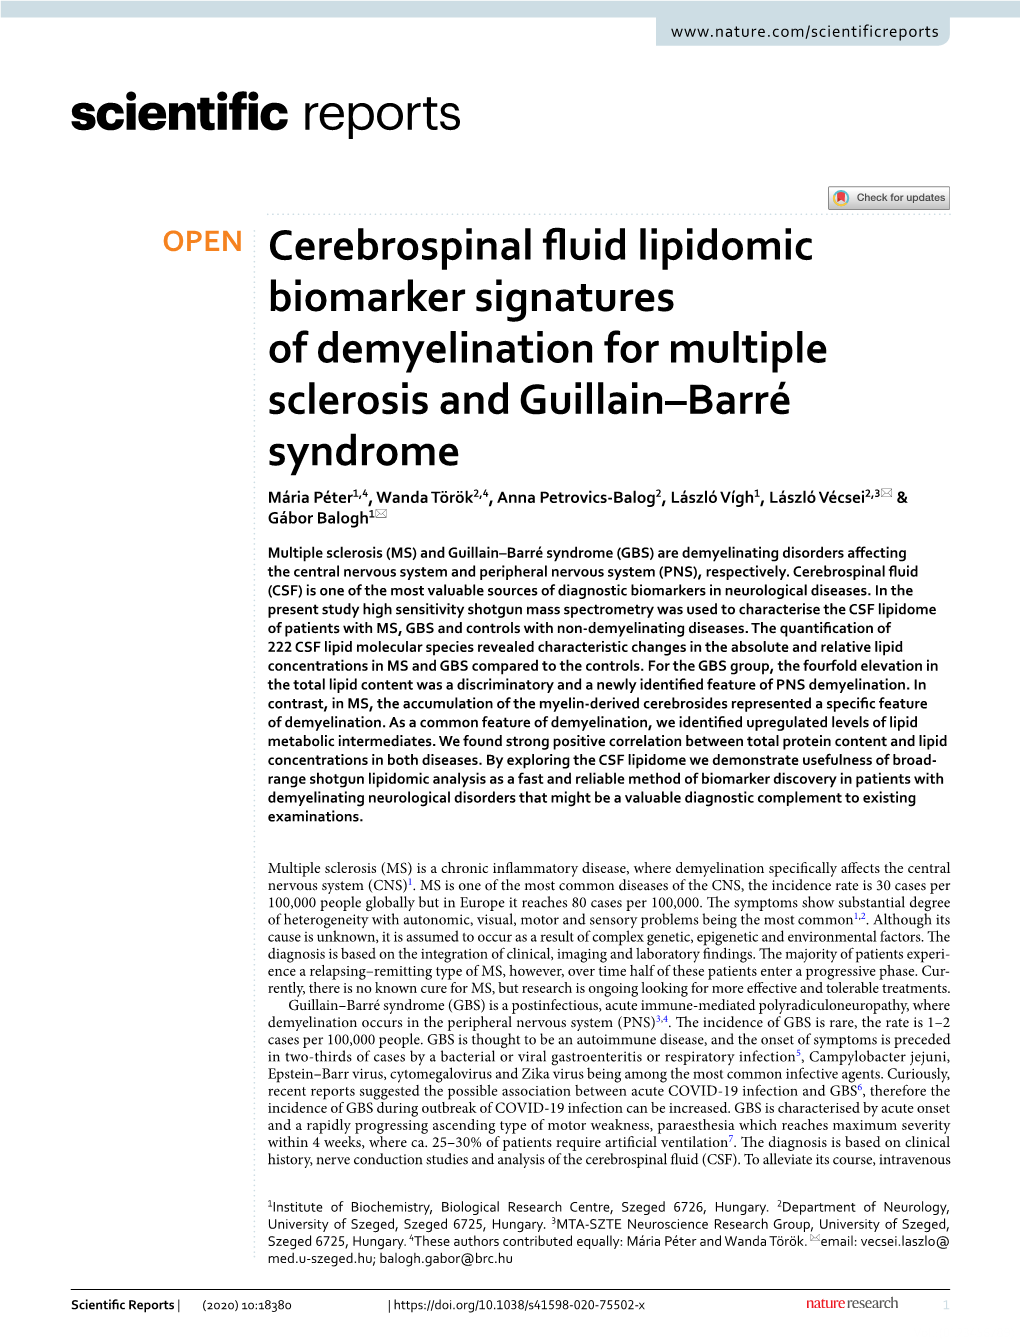 Cerebrospinal Fluid Lipidomic Biomarker Signatures Of